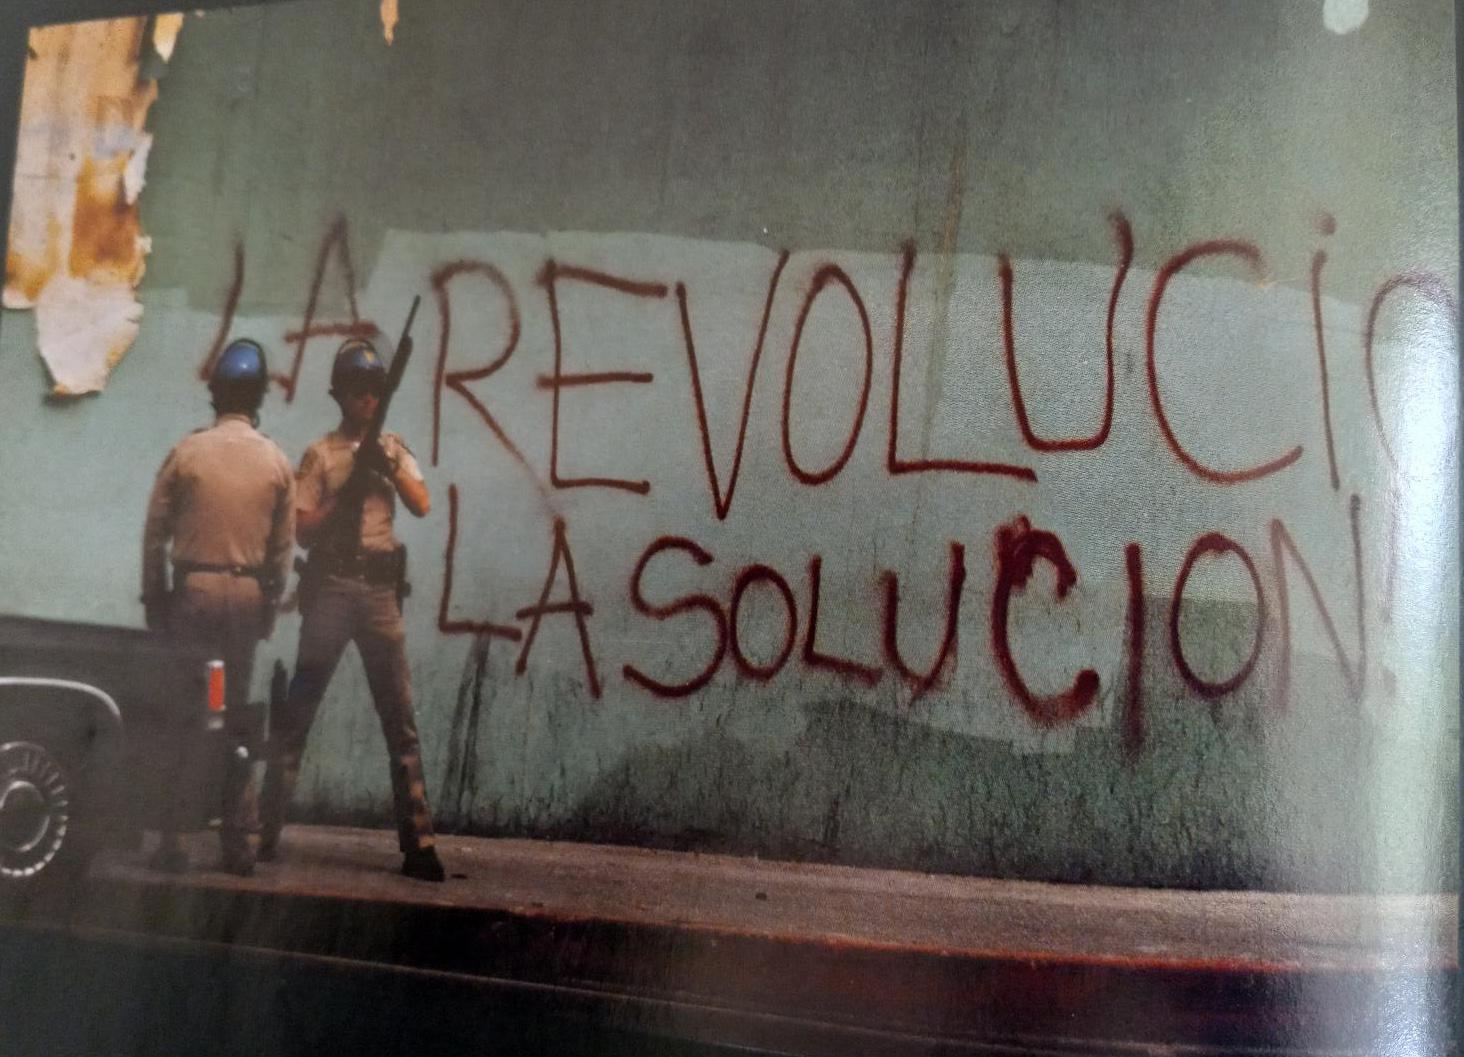 After beating of Rodney King, graffiti on wall in LA: Revolución La Solución.